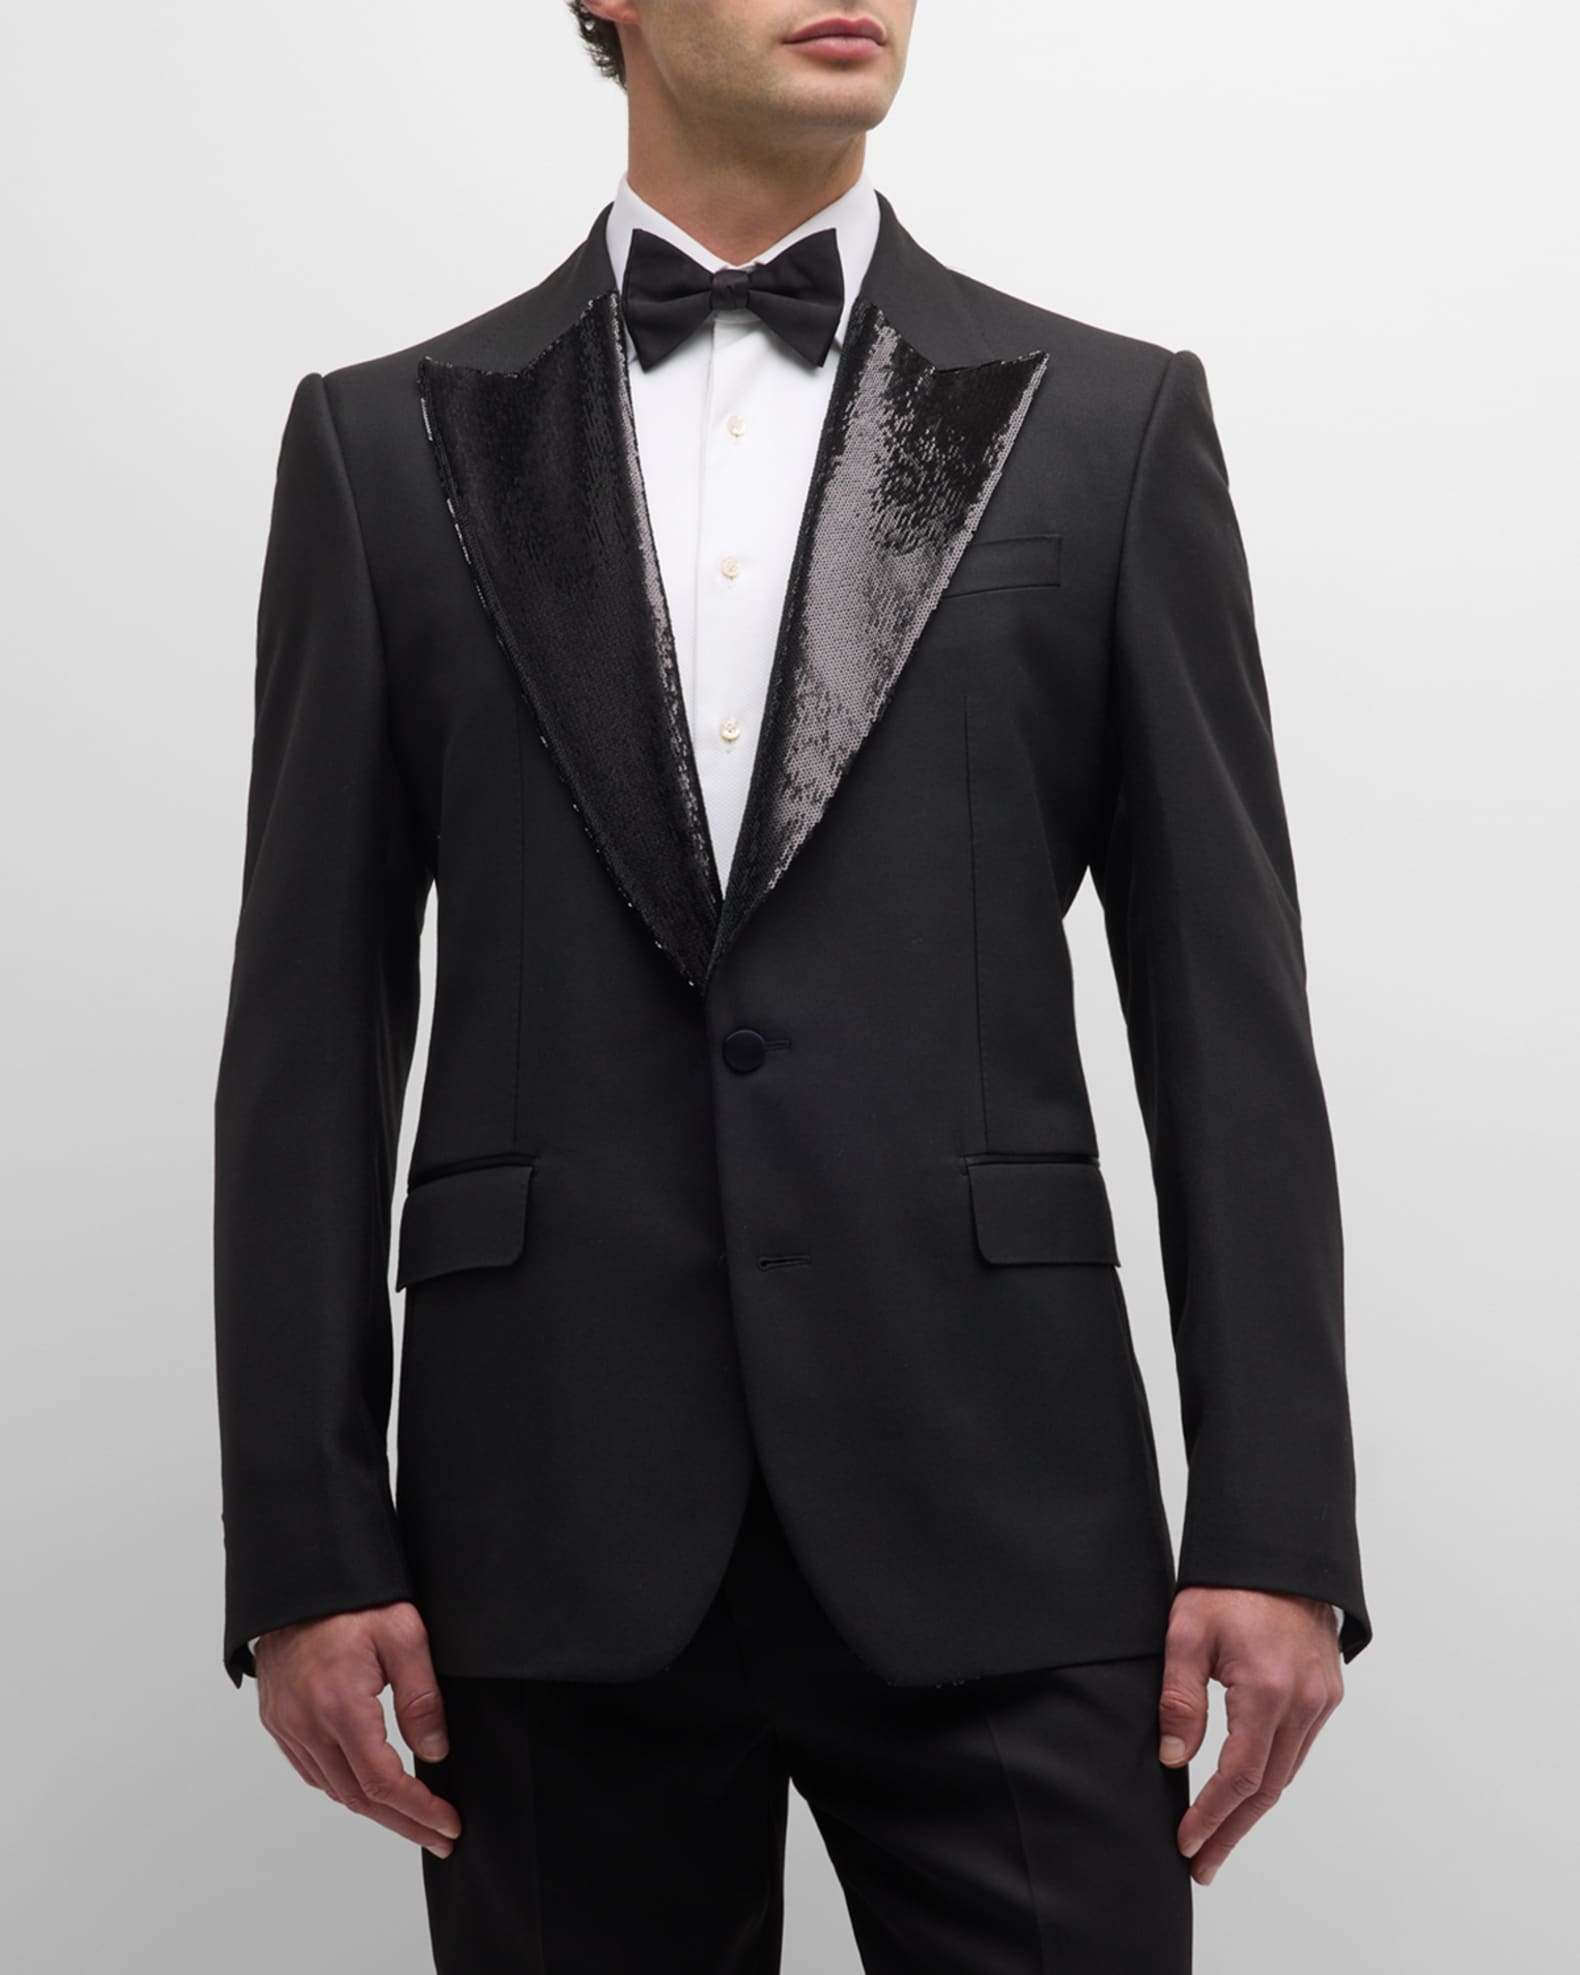 Dolce&Gabbana Men's Tuxedo Jacket with Sequin Lapels | Neiman Marcus